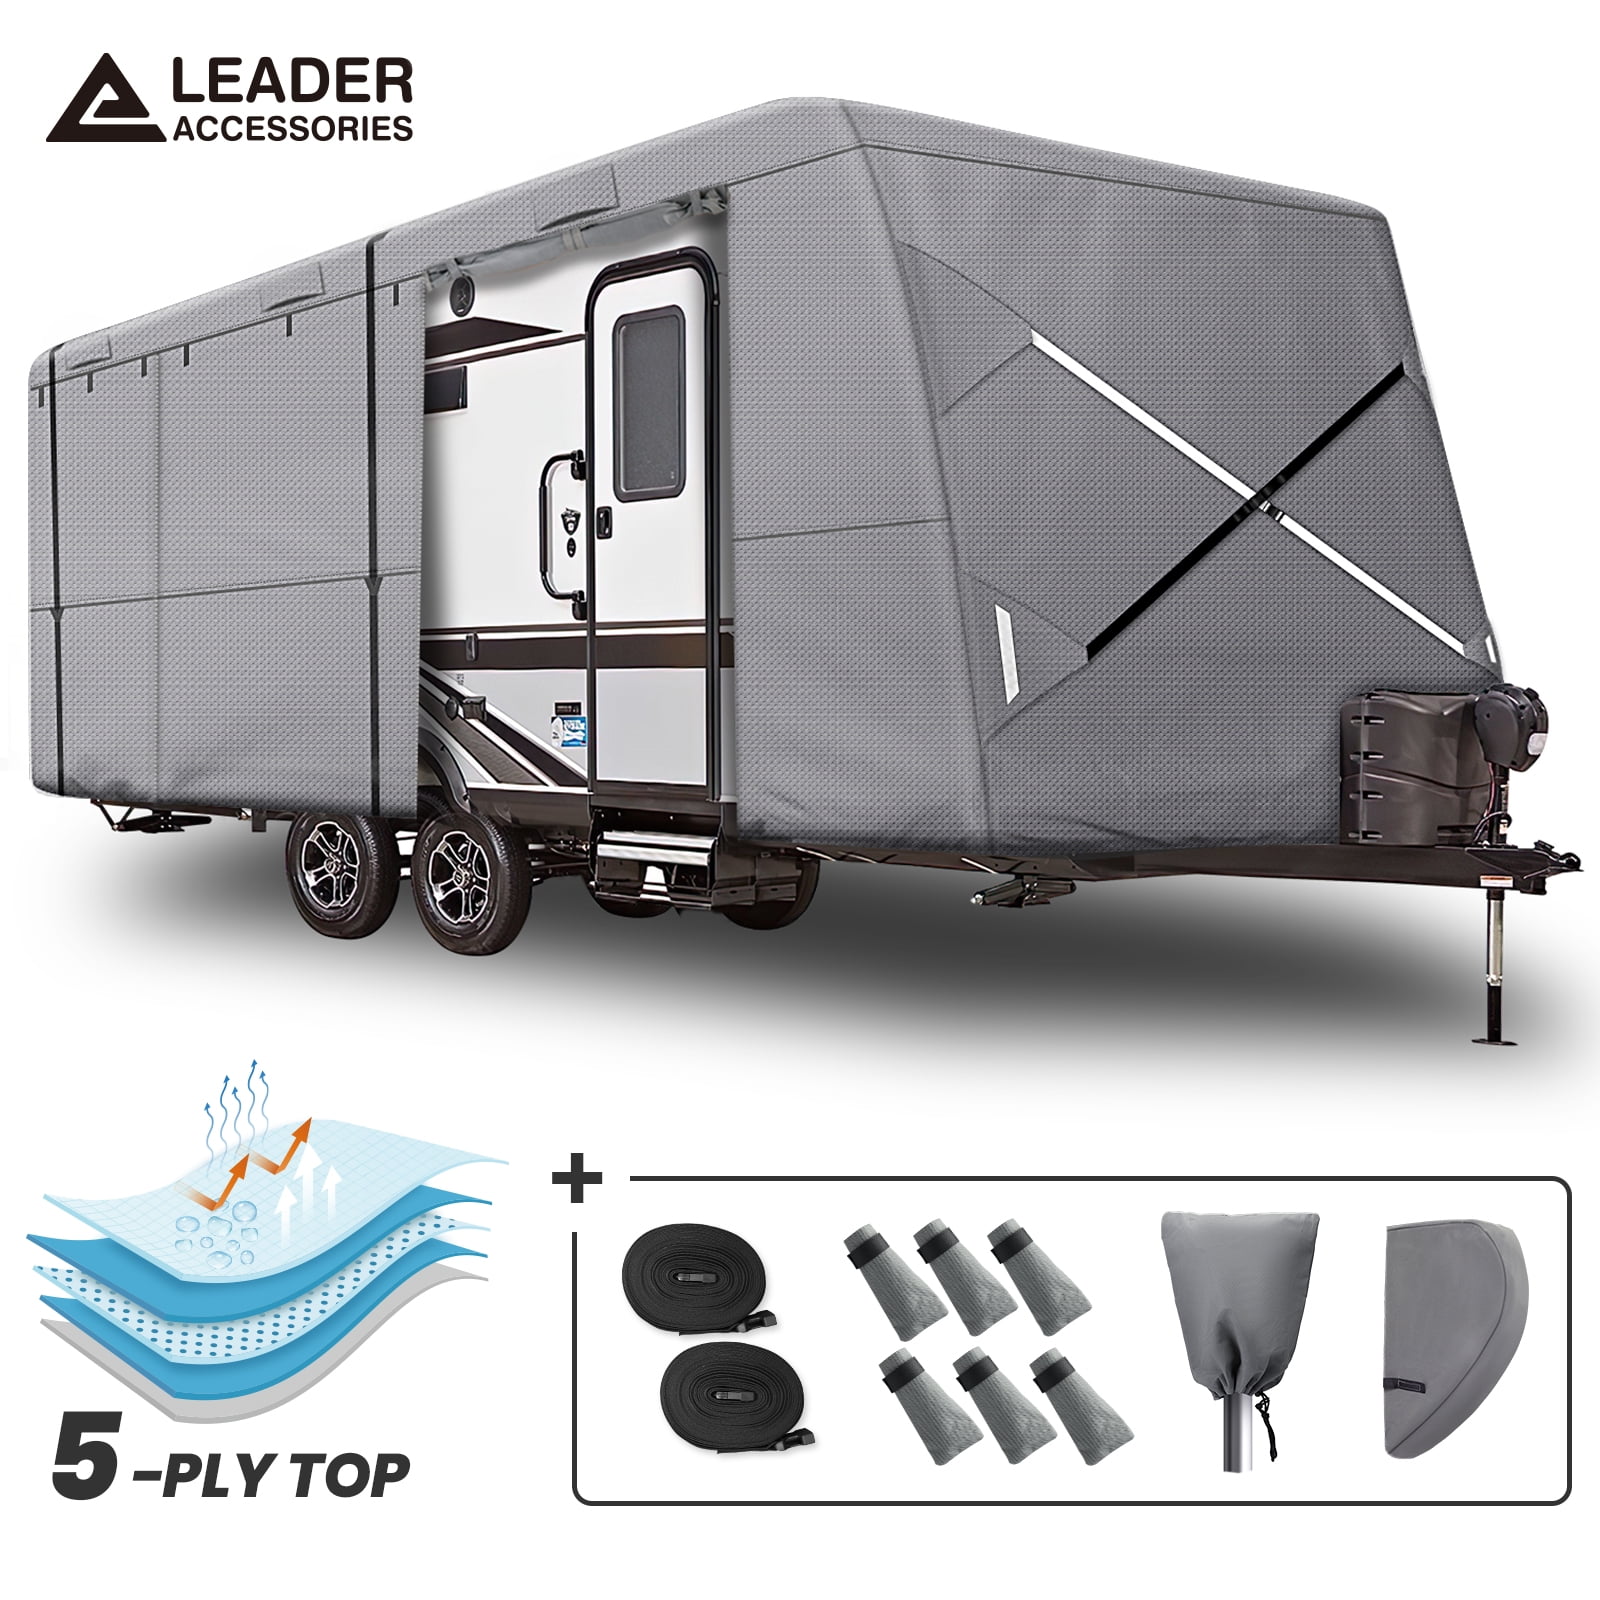 Leader Accessories Travel Trailer RV Cover Fits 20-22 Trailer Camper Polypropylene 270 l102 w104 h 